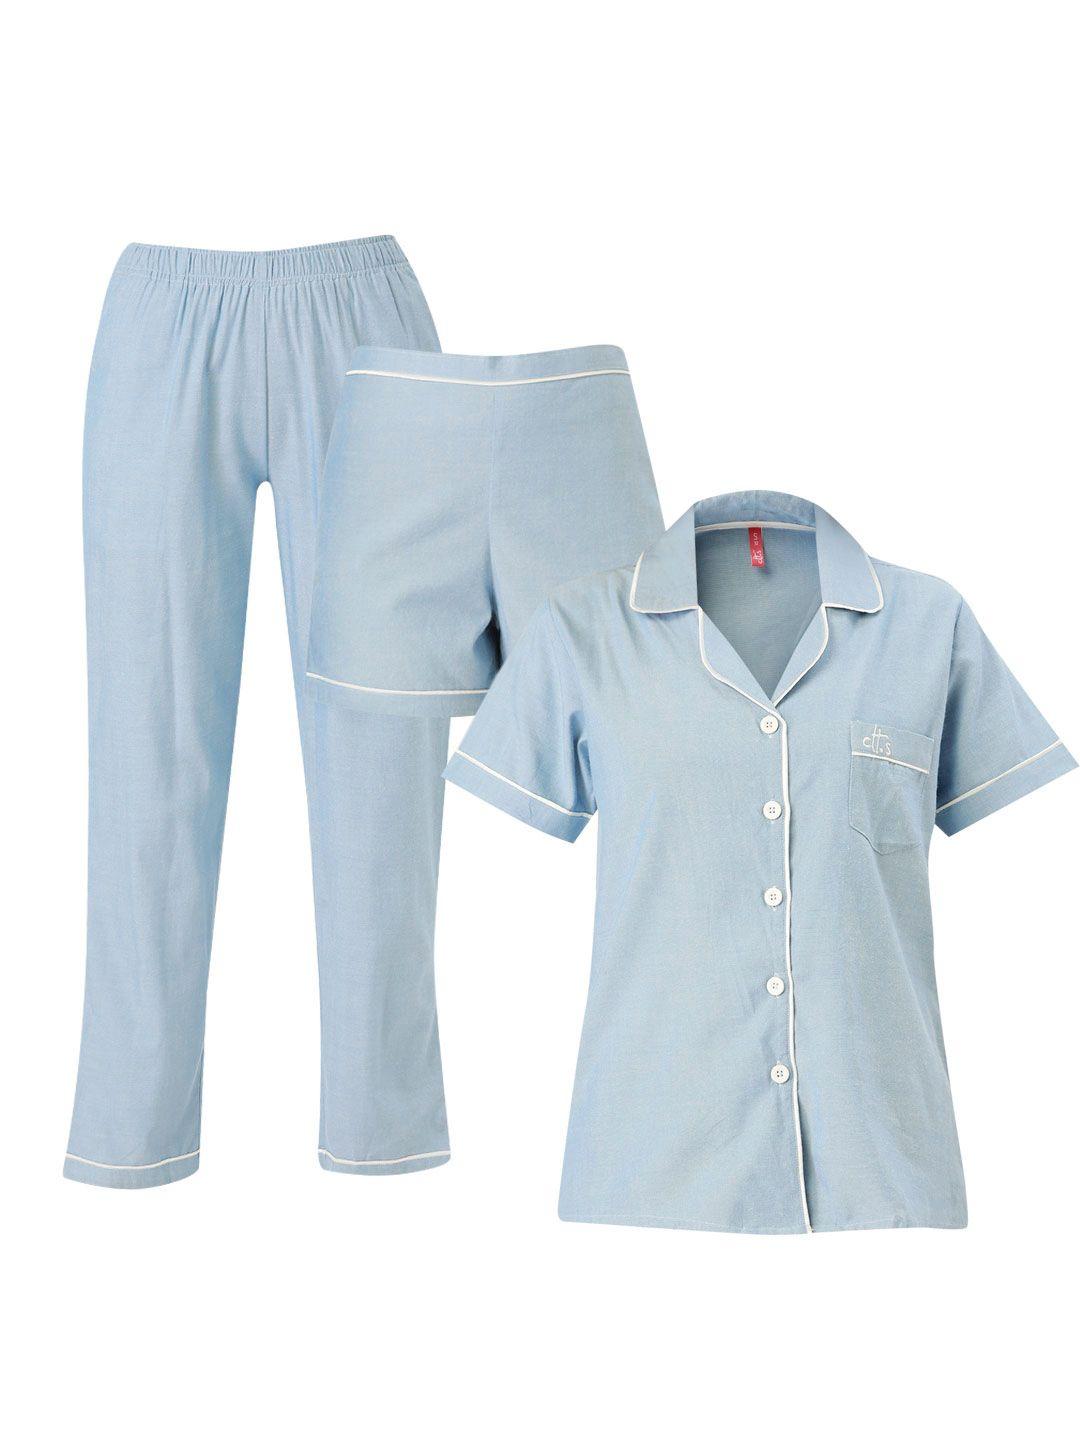 Clt.s Women Blue 3 Piece Cotton Pyjama Set